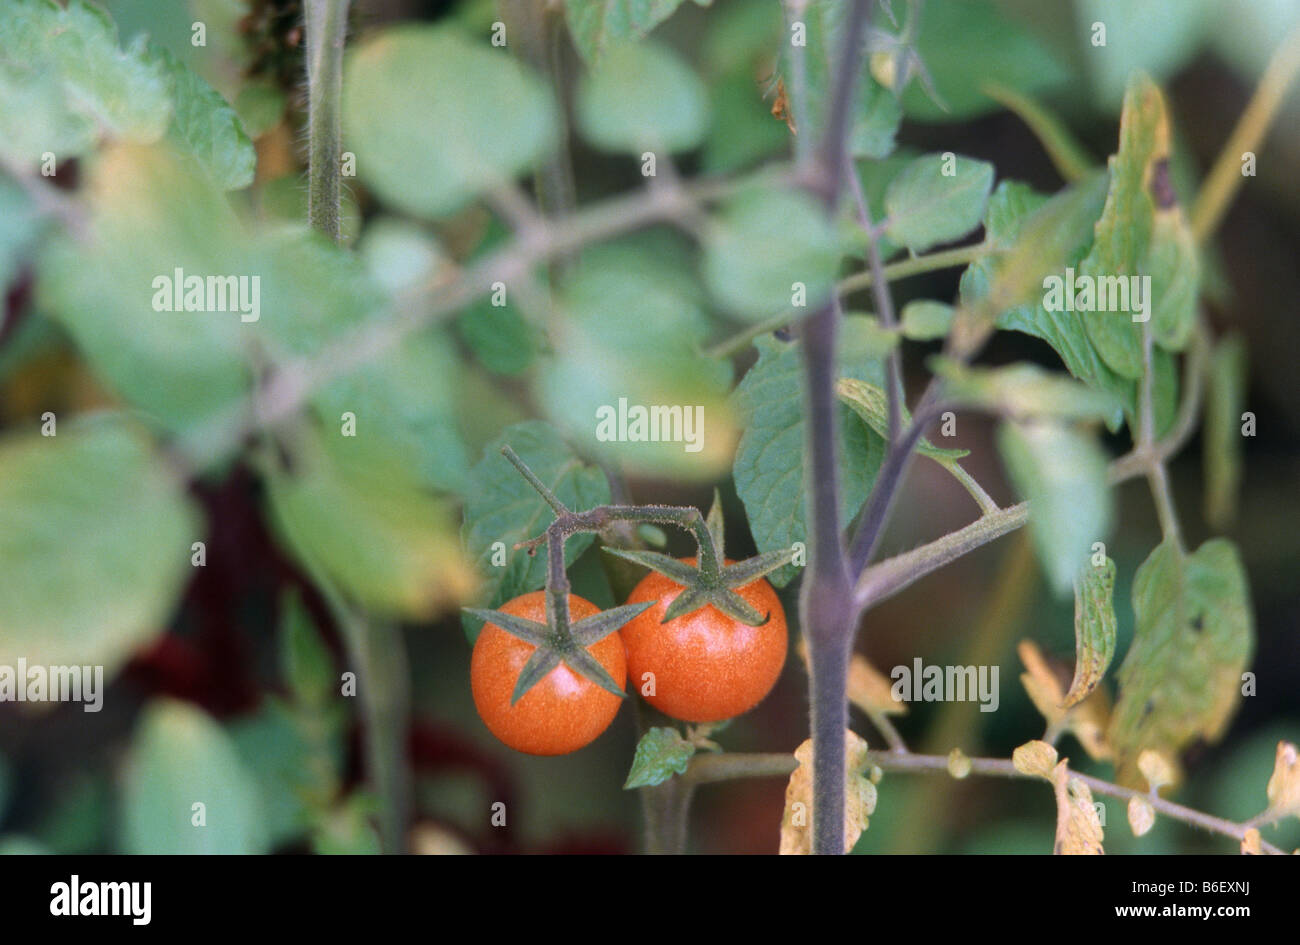 garden tomato (Solanum lycopersicum var. pimpinellifolium, Lycopersicon esculentum var. pimpinellifolium, Lycopersicon pimpinel Stock Photo